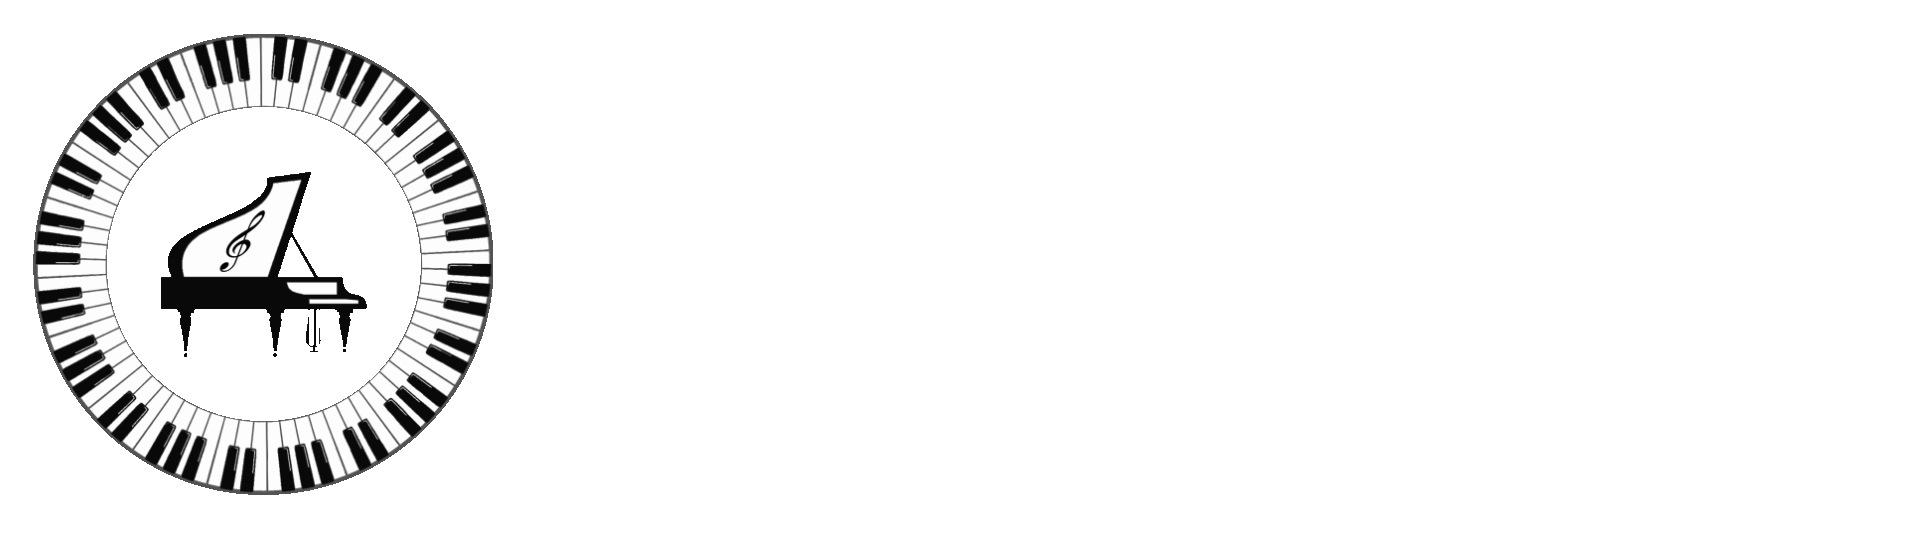 Klavierunterricht Annegret Lang in Kempten